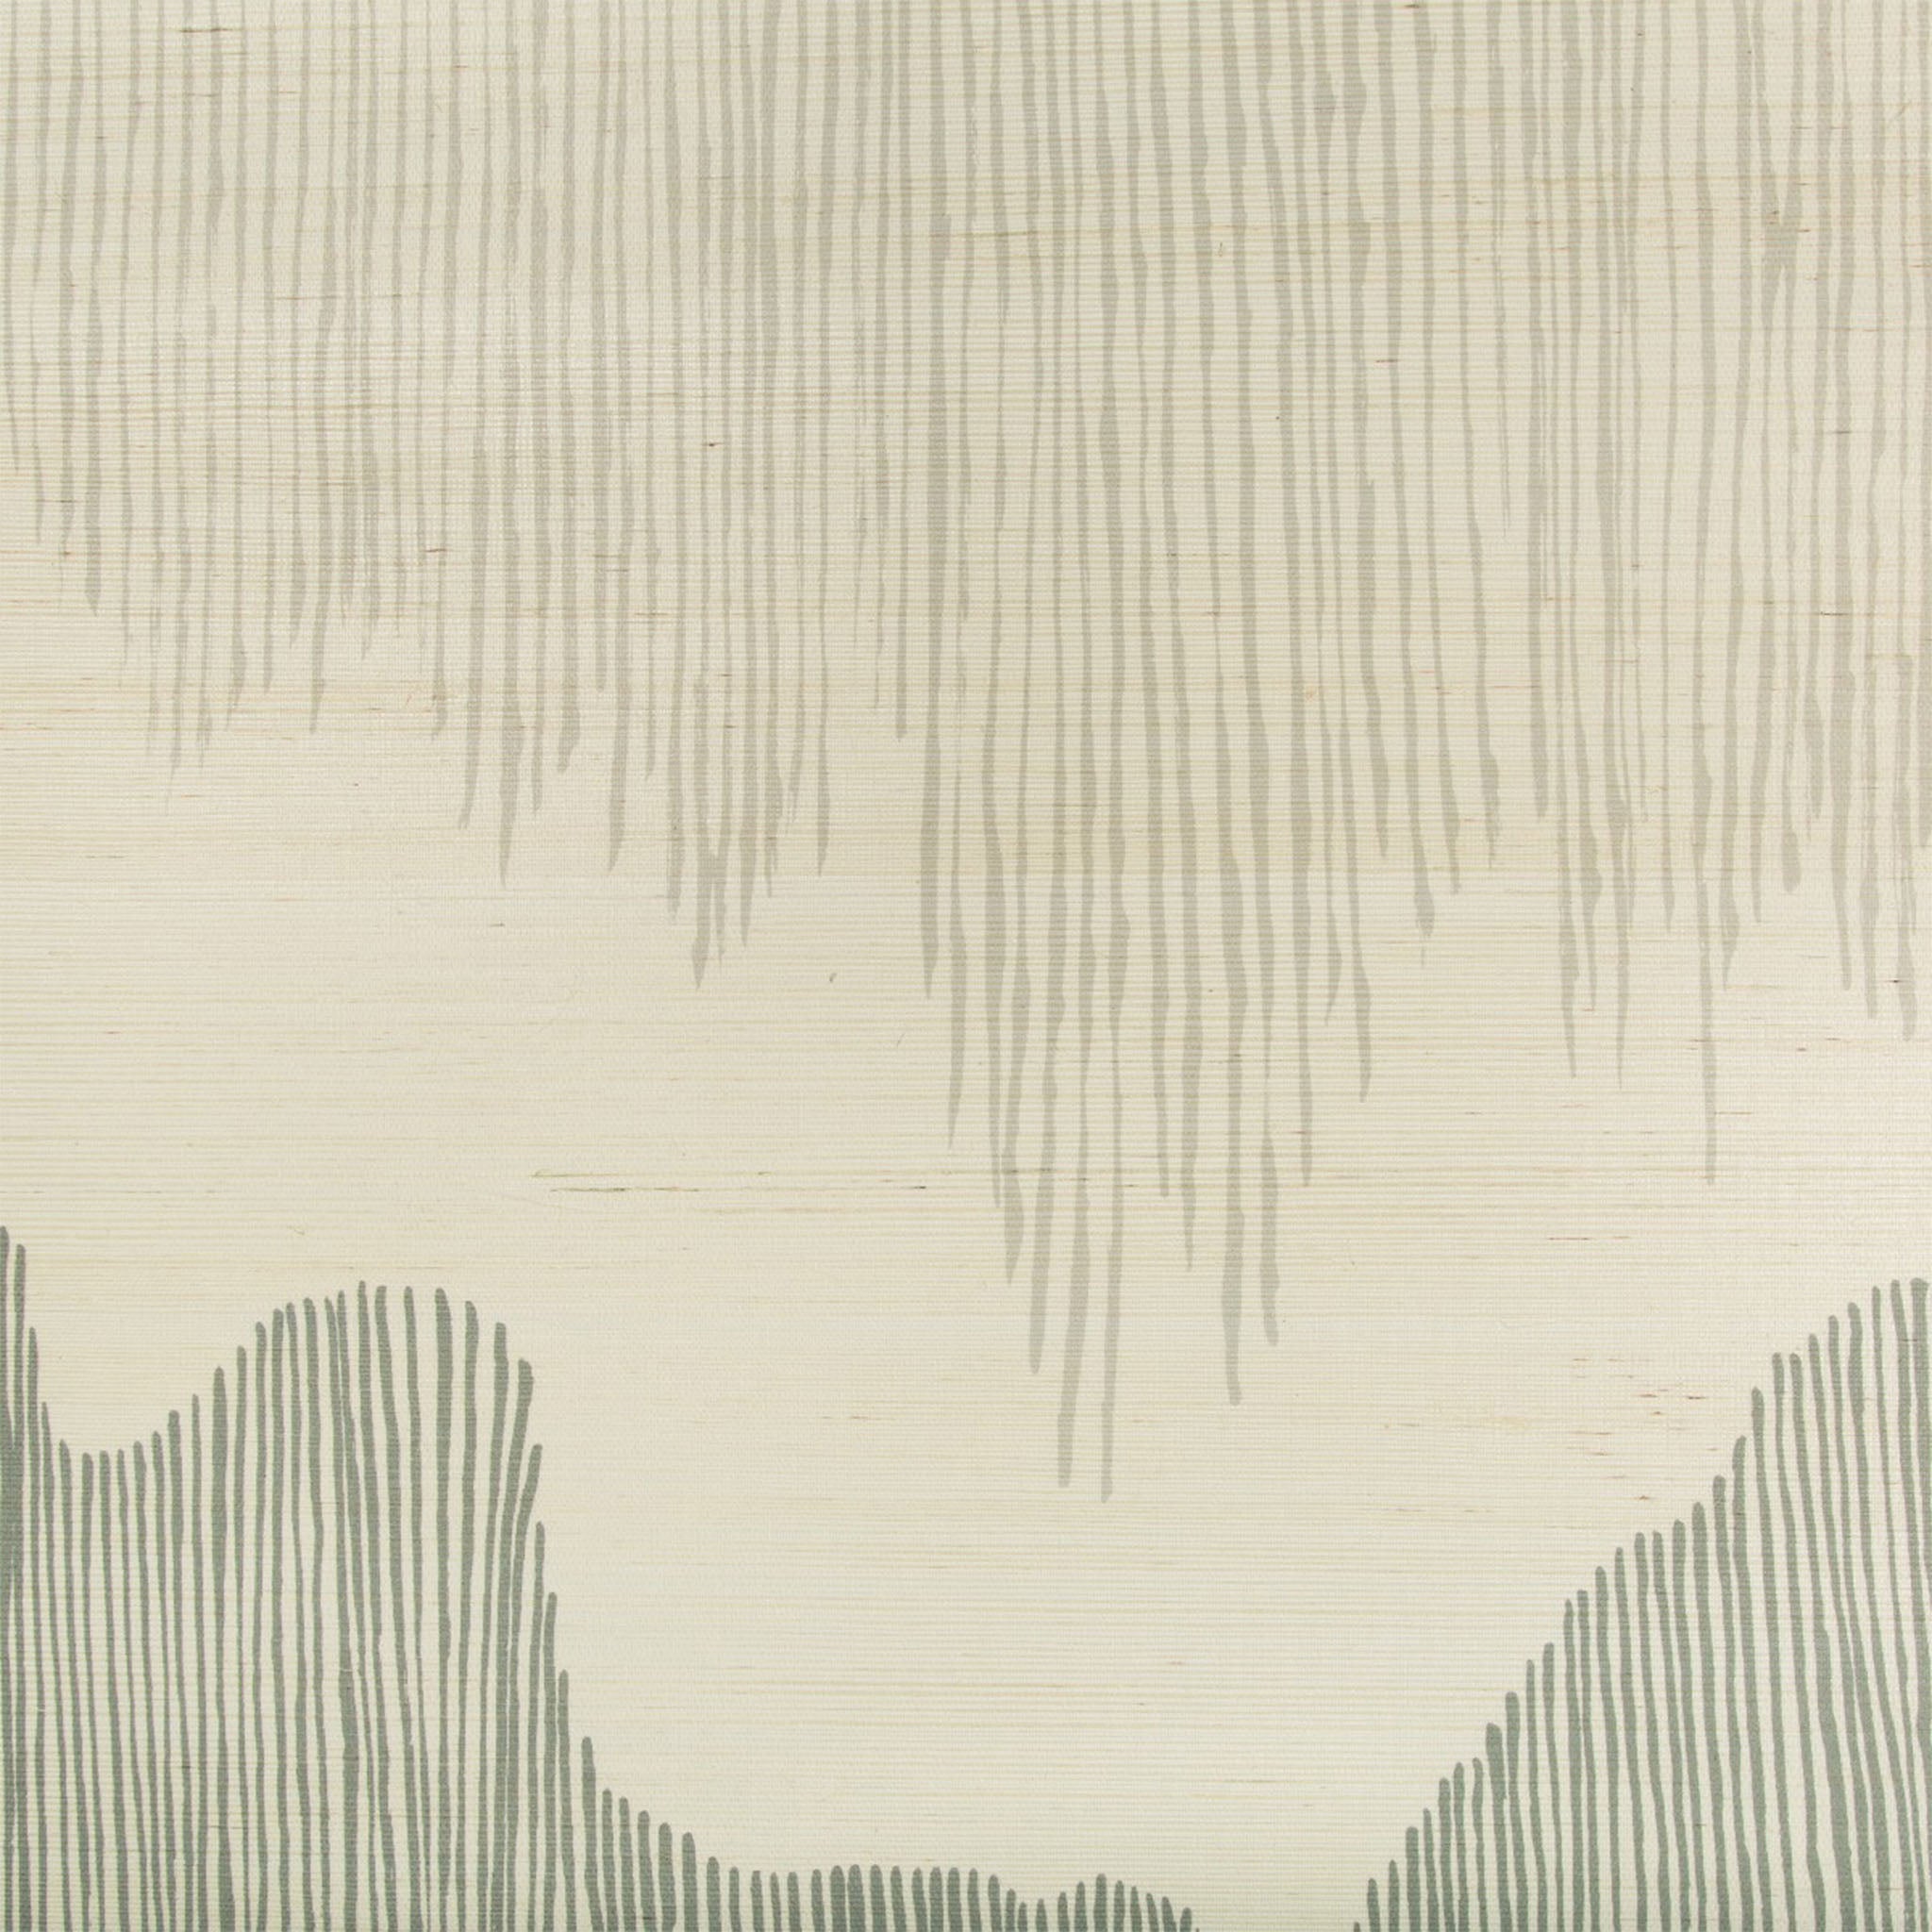 Abstract Alps Wallpaper, 19.7 yard roll